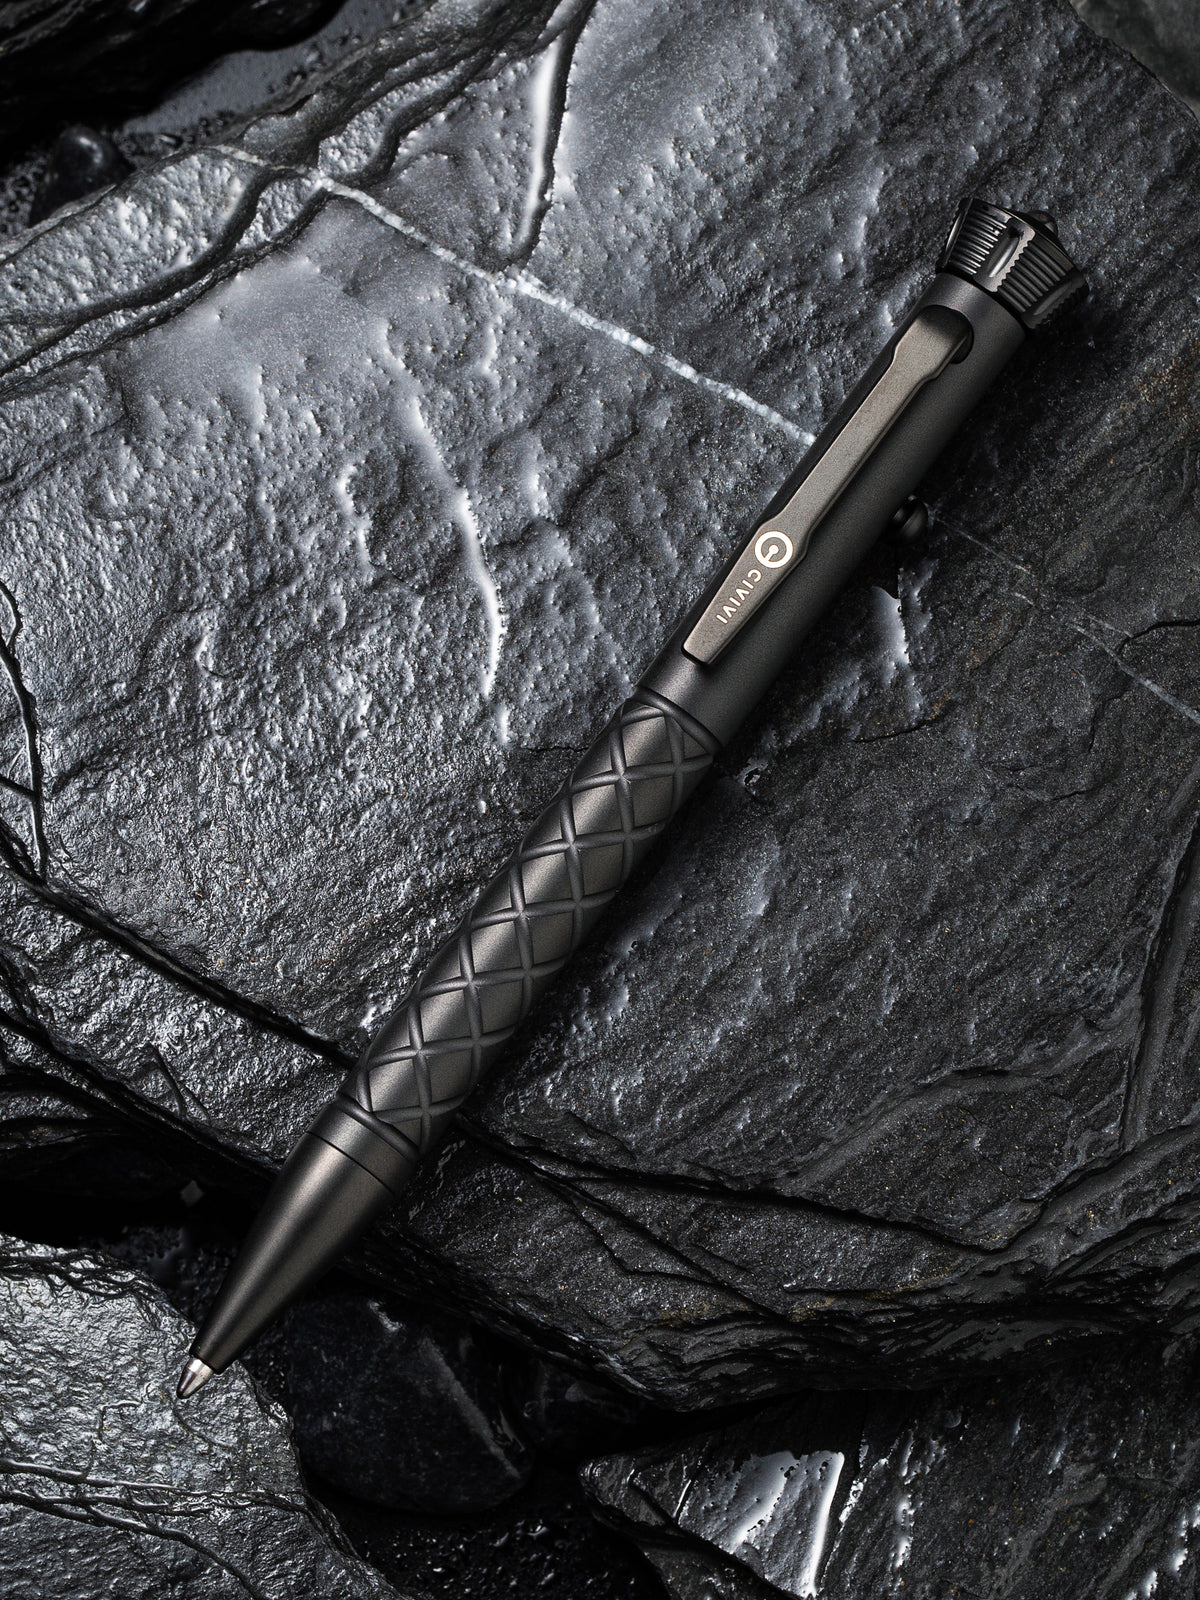 CIVIVI Coronet | Black Titanium Pen w/ a Spinner Bearing on Top